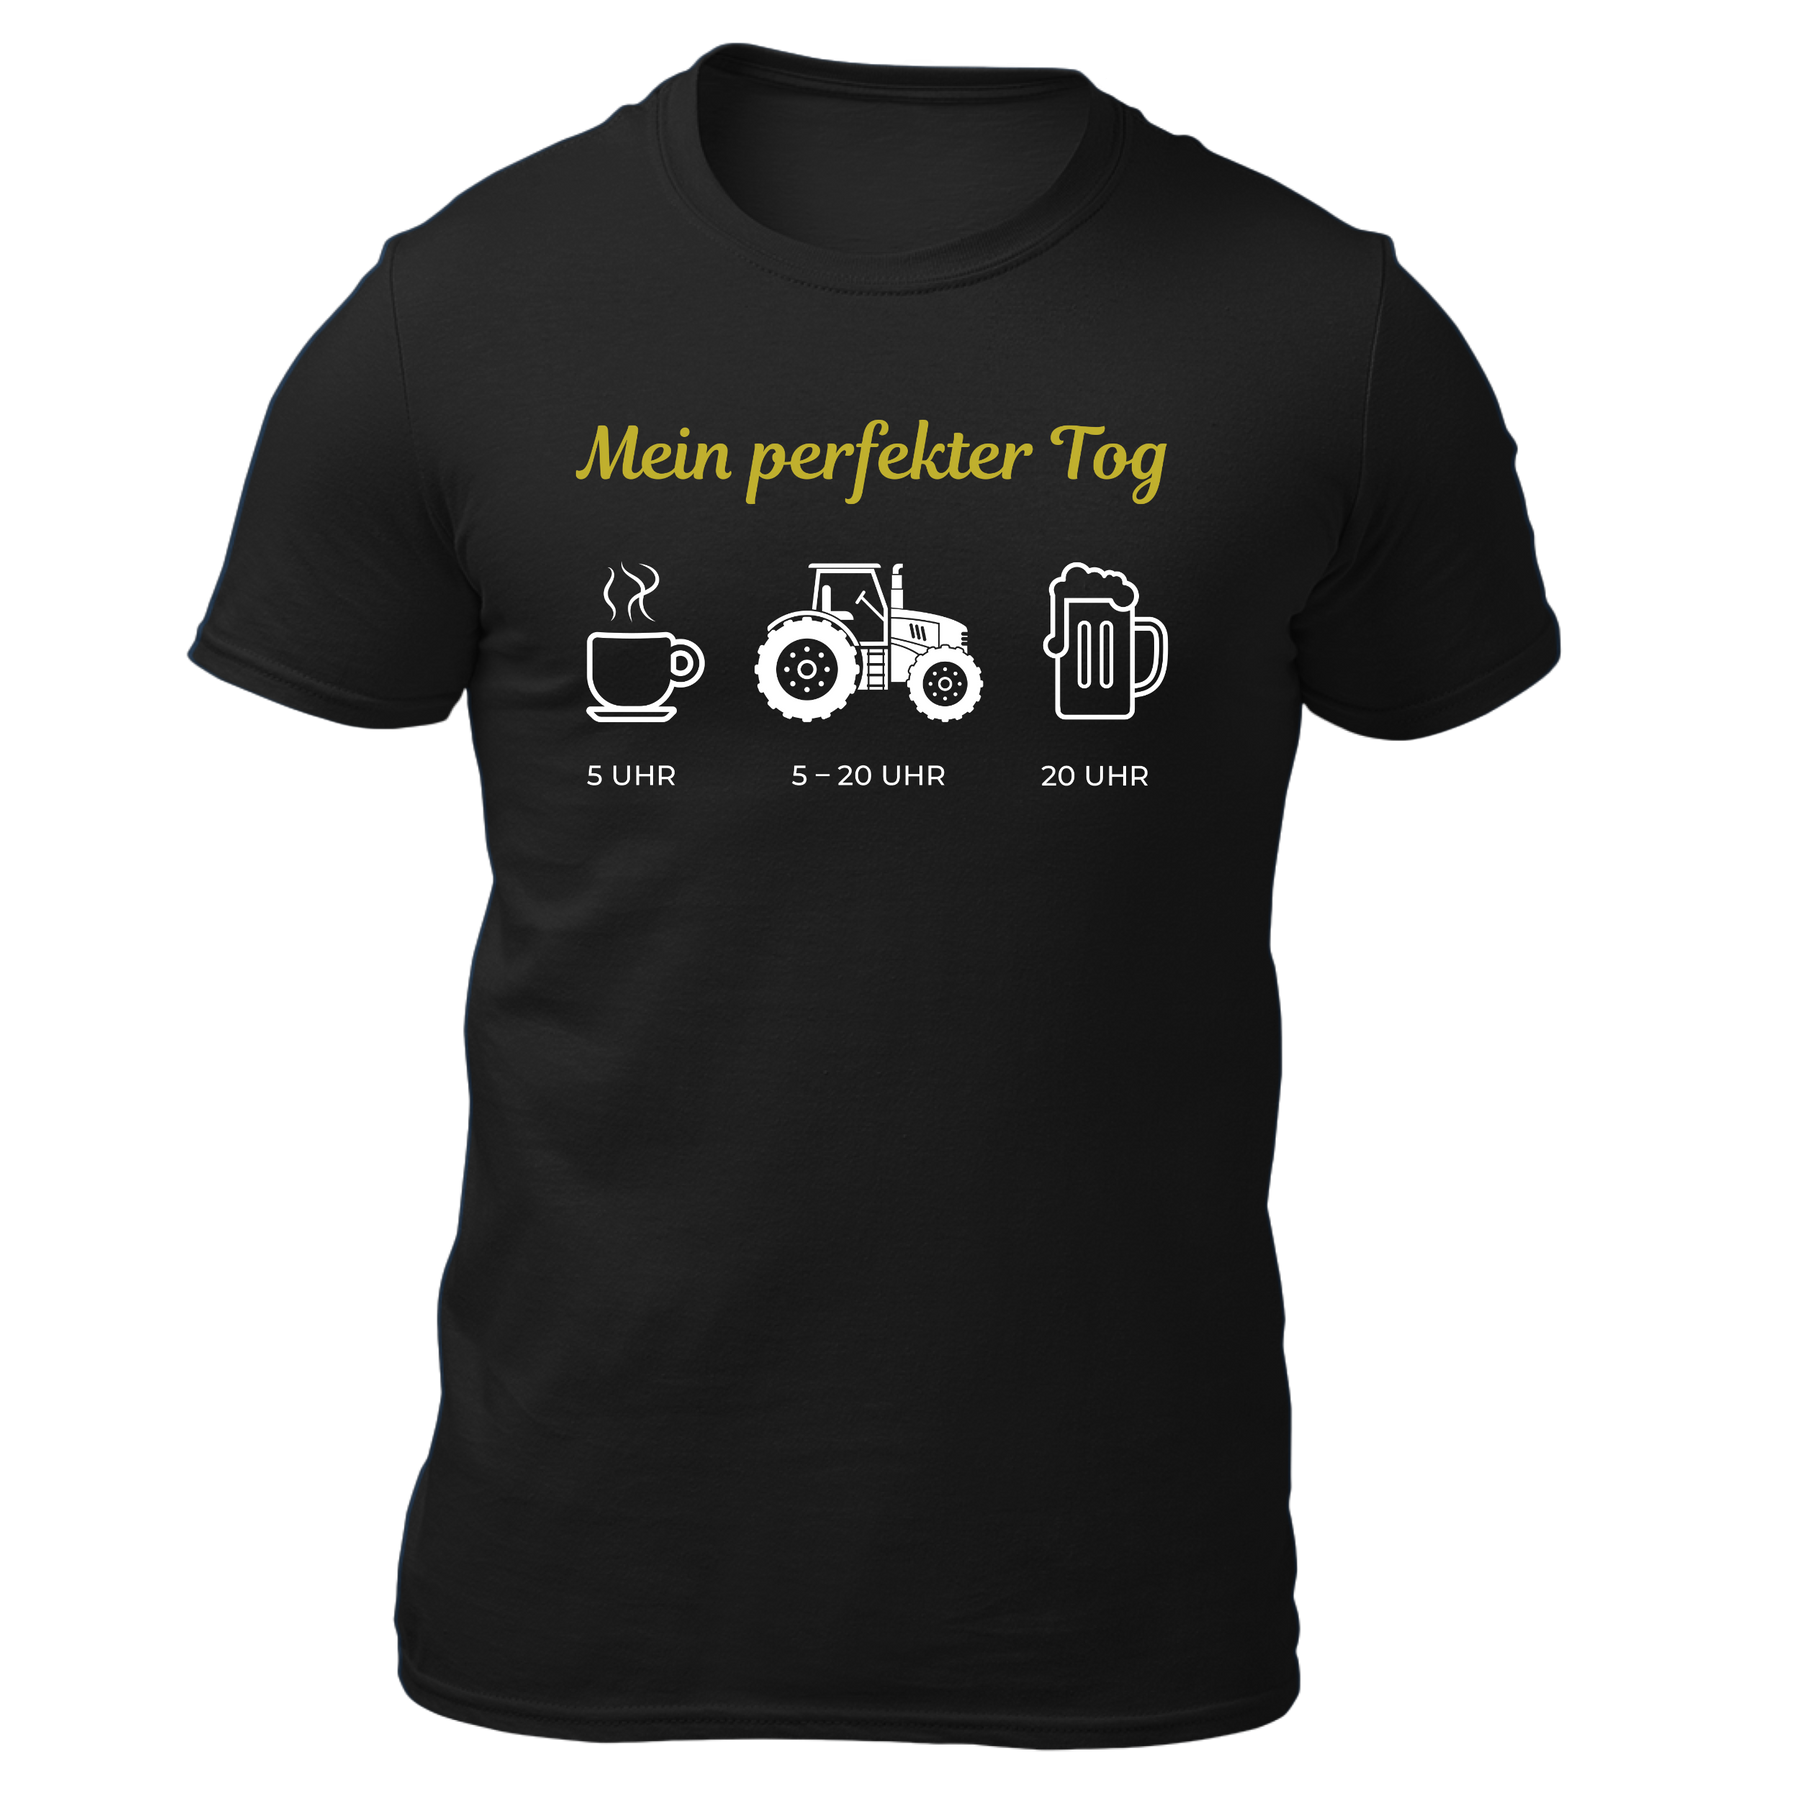 Mein perfekter Tog - Herren Shirt Bio